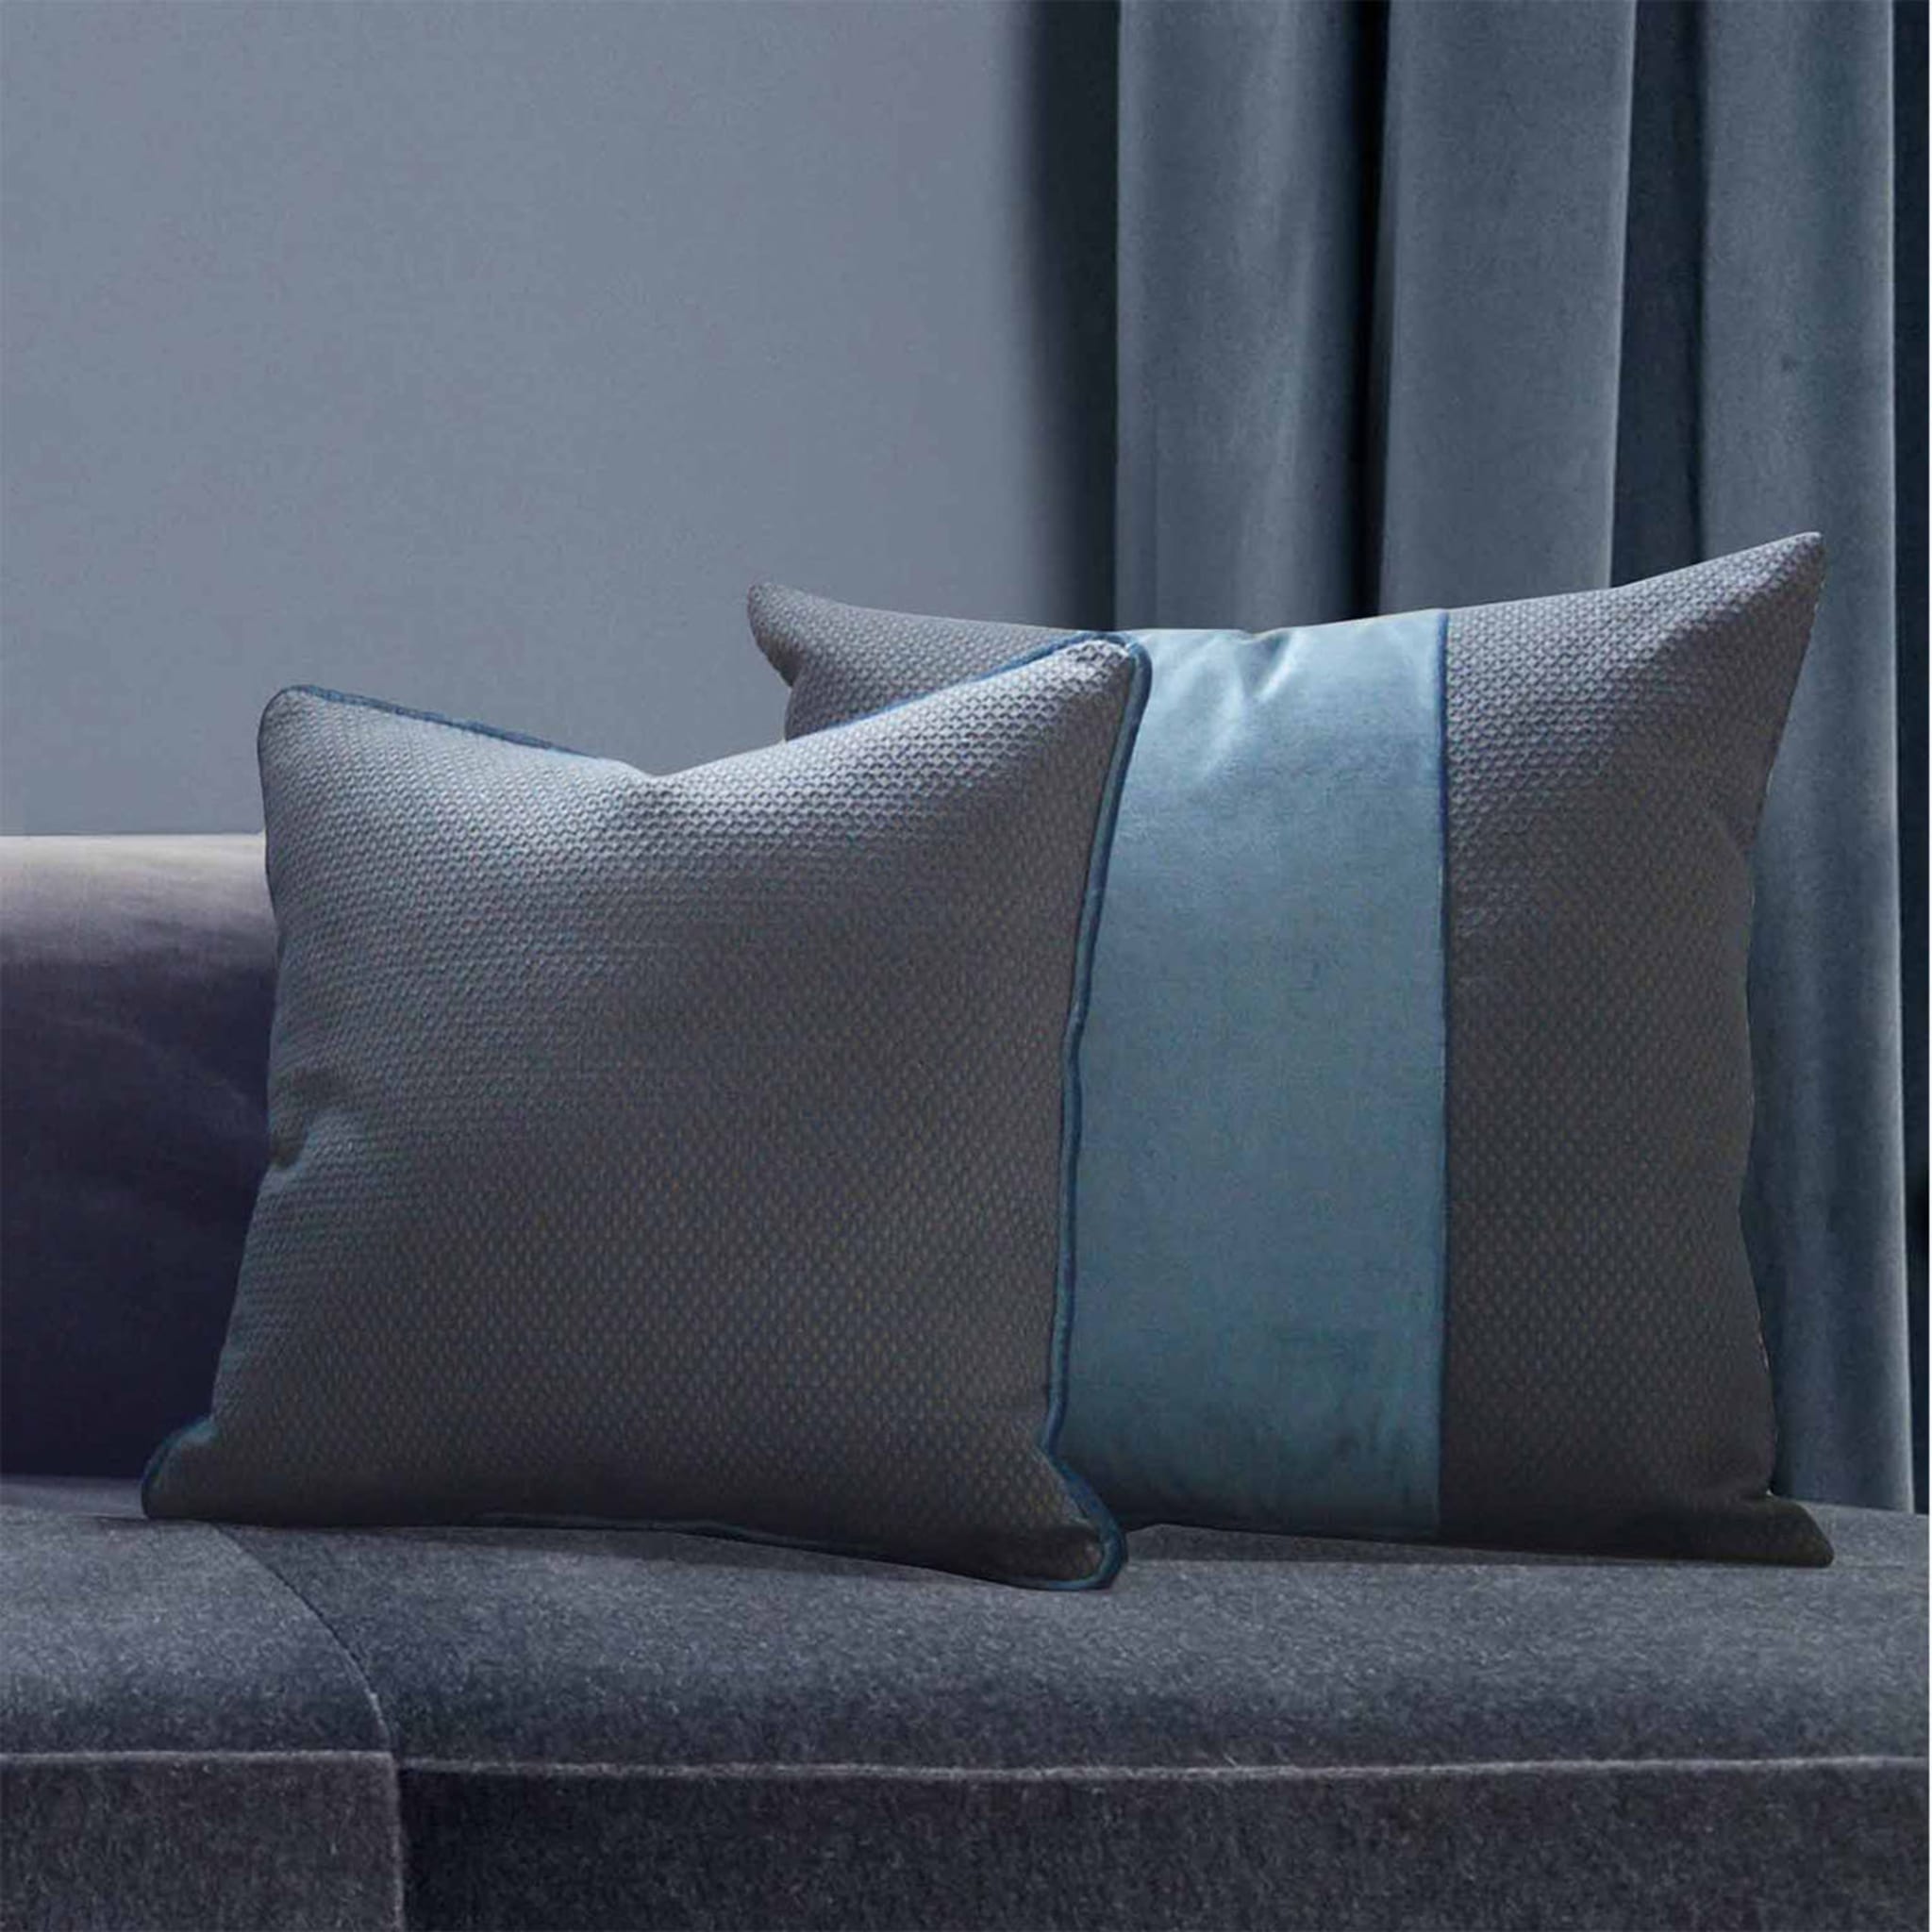 Blue Beige Carré Cushion in false unit jacquard fabric - Alternative view 1